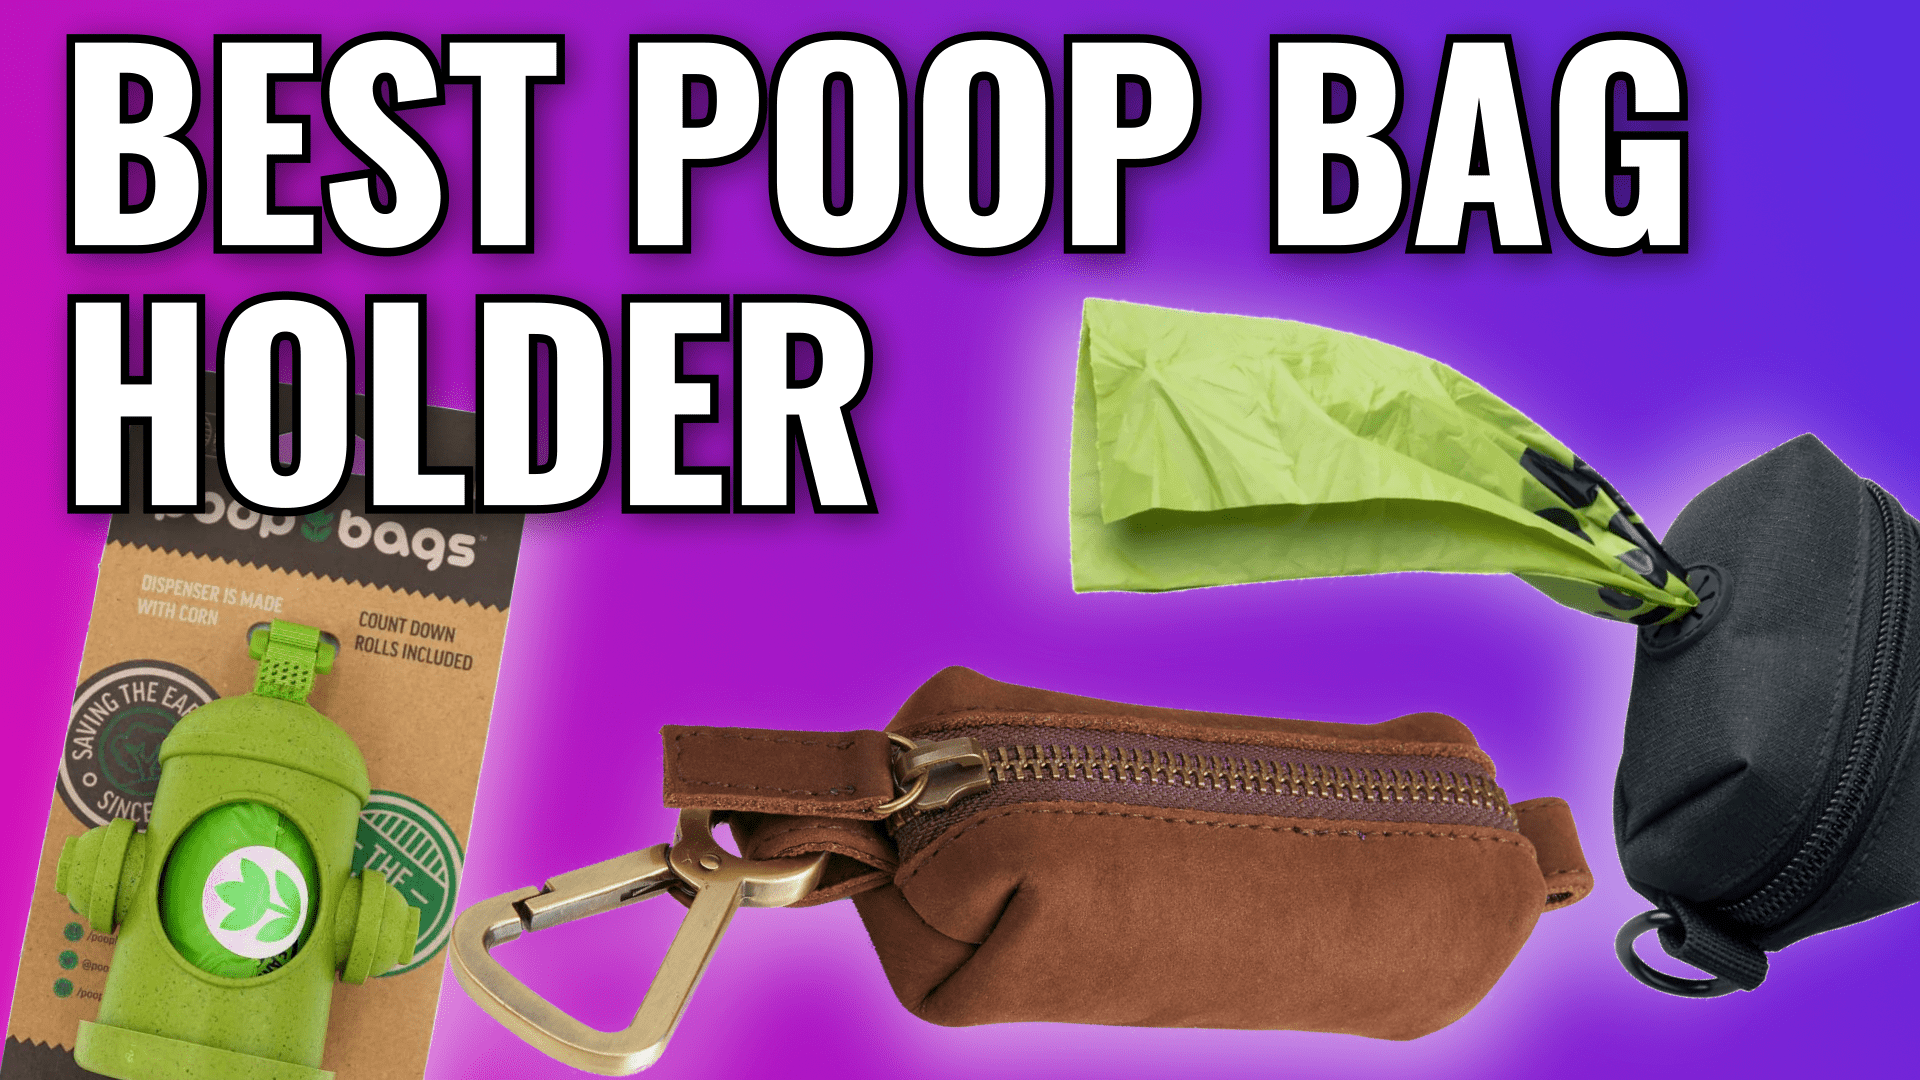 Pet Waste Dog Poo Puppy Pick-Up Bags Pet Poop Bag Holder Hook Pouch Portable